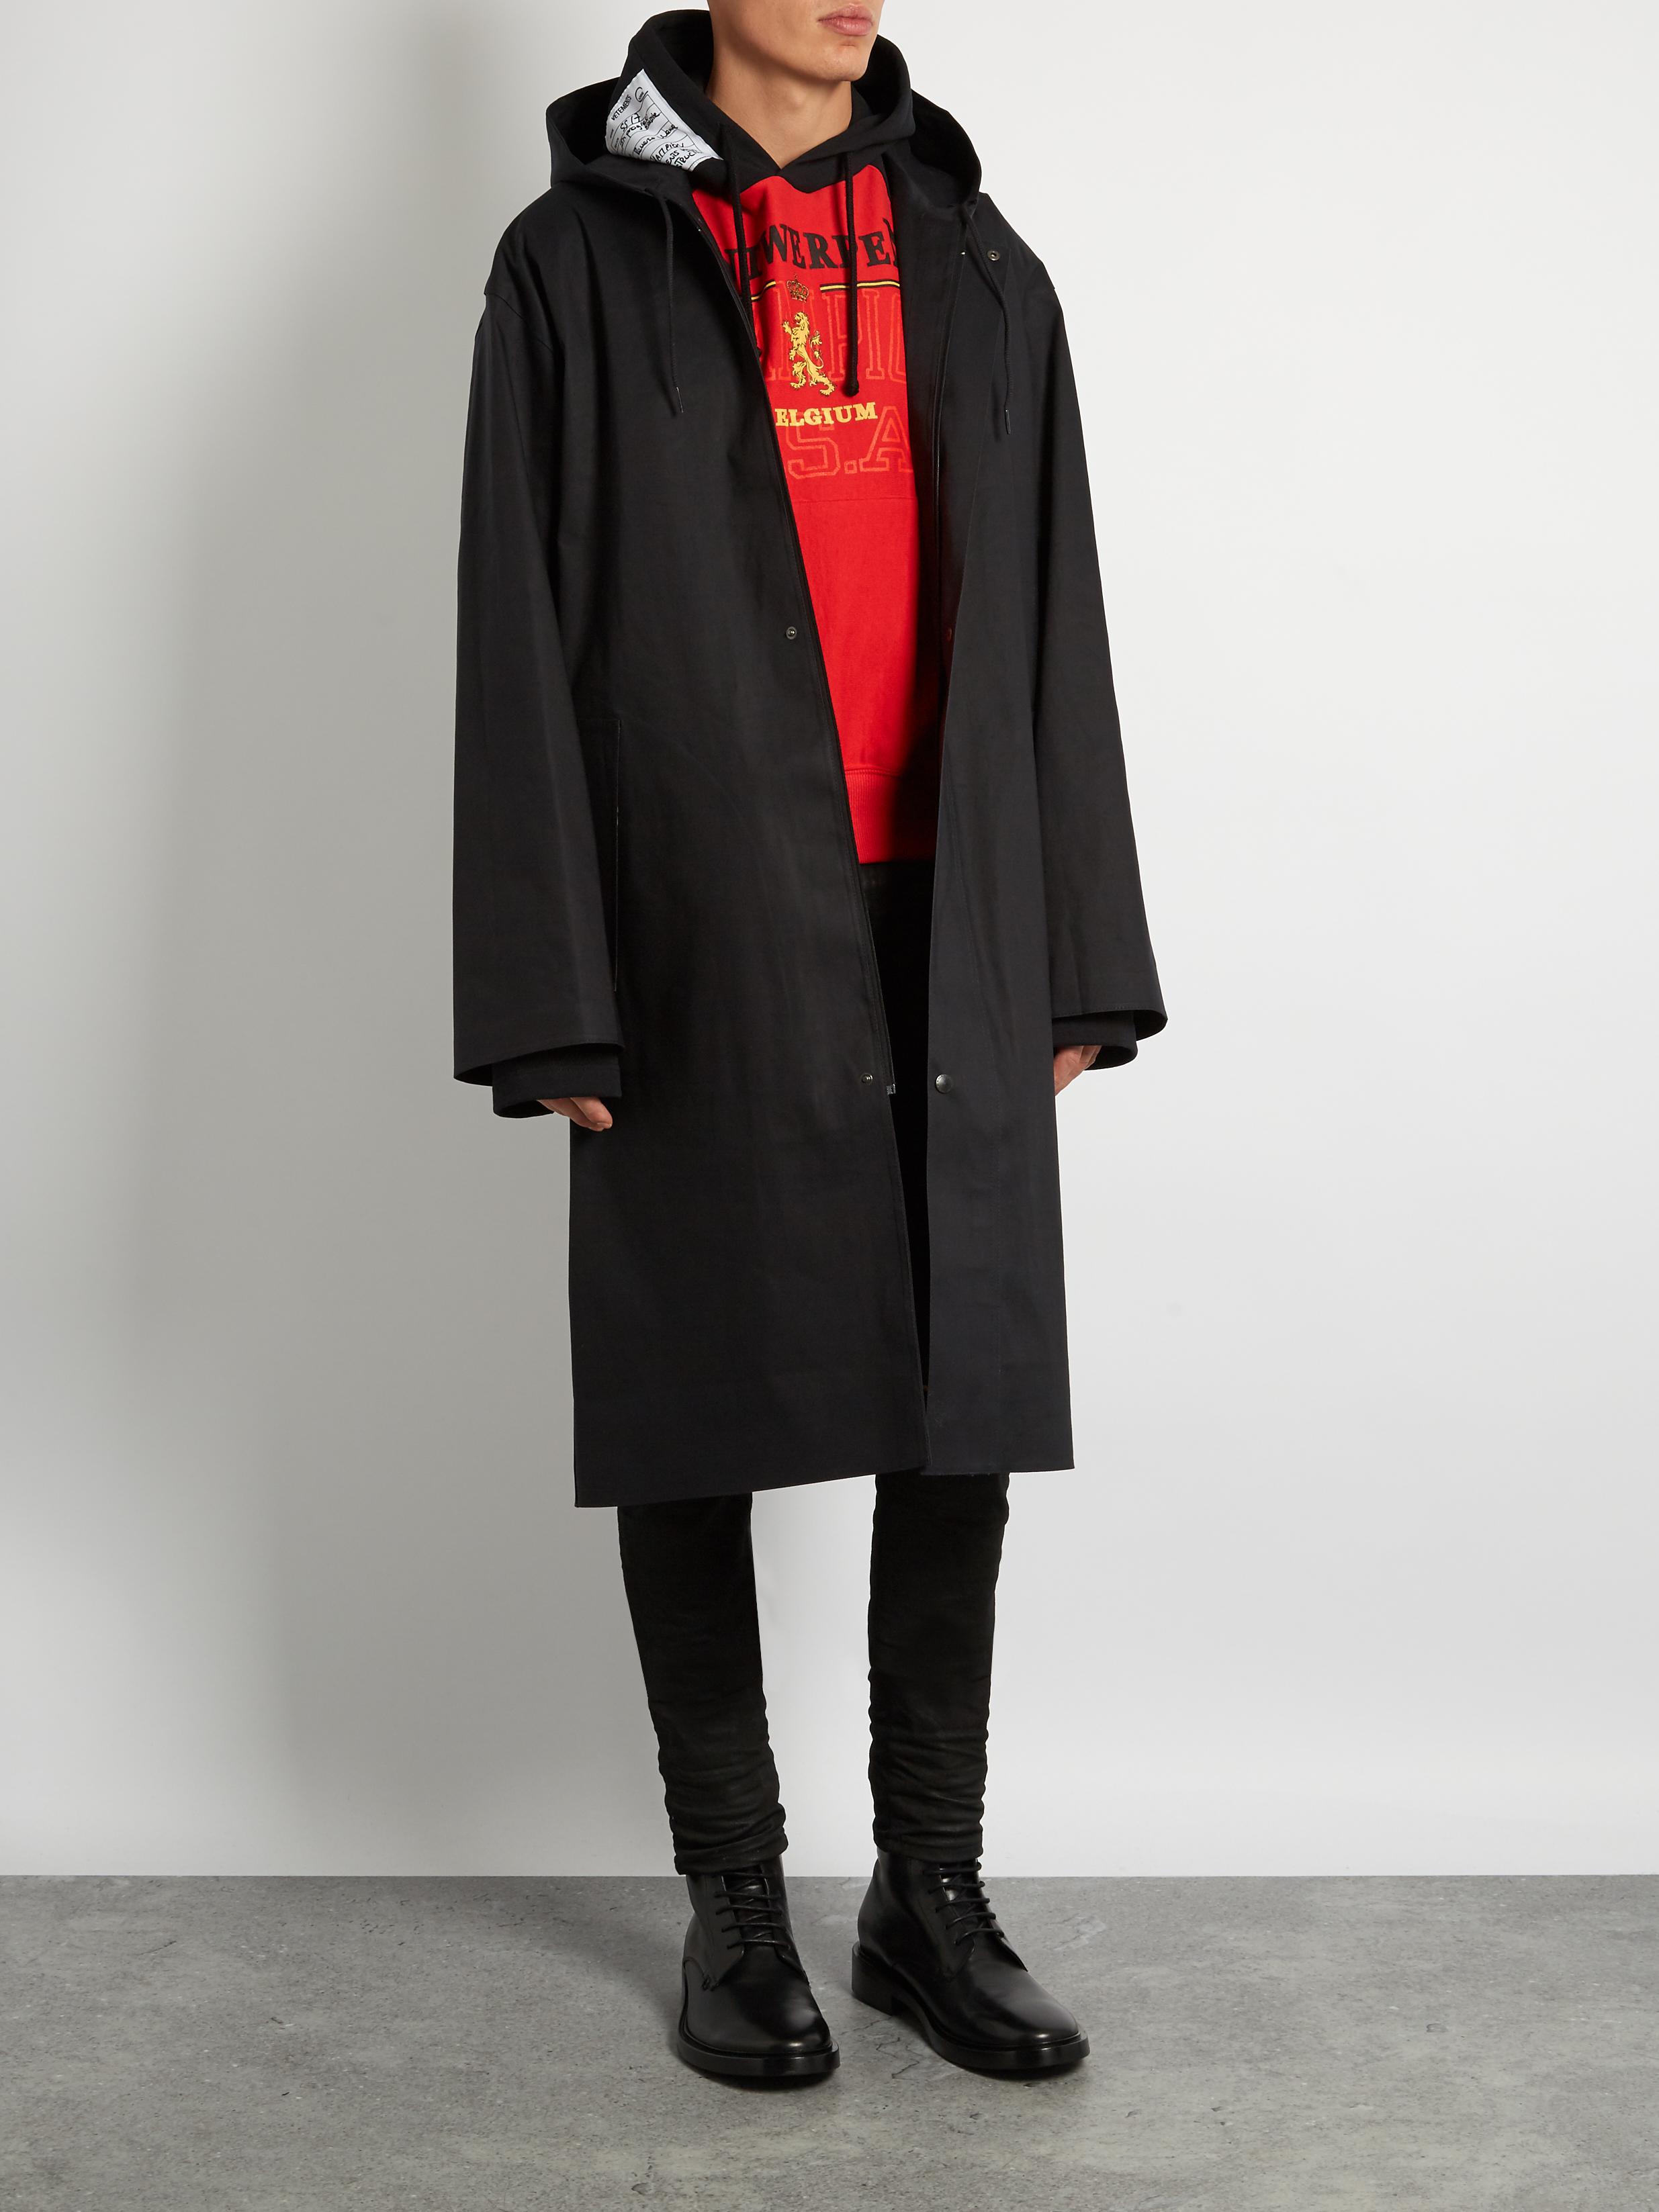 Lyst - Vetements X Mackintosh Oversized Raincoat in Black
 Original Mackintosh Raincoat